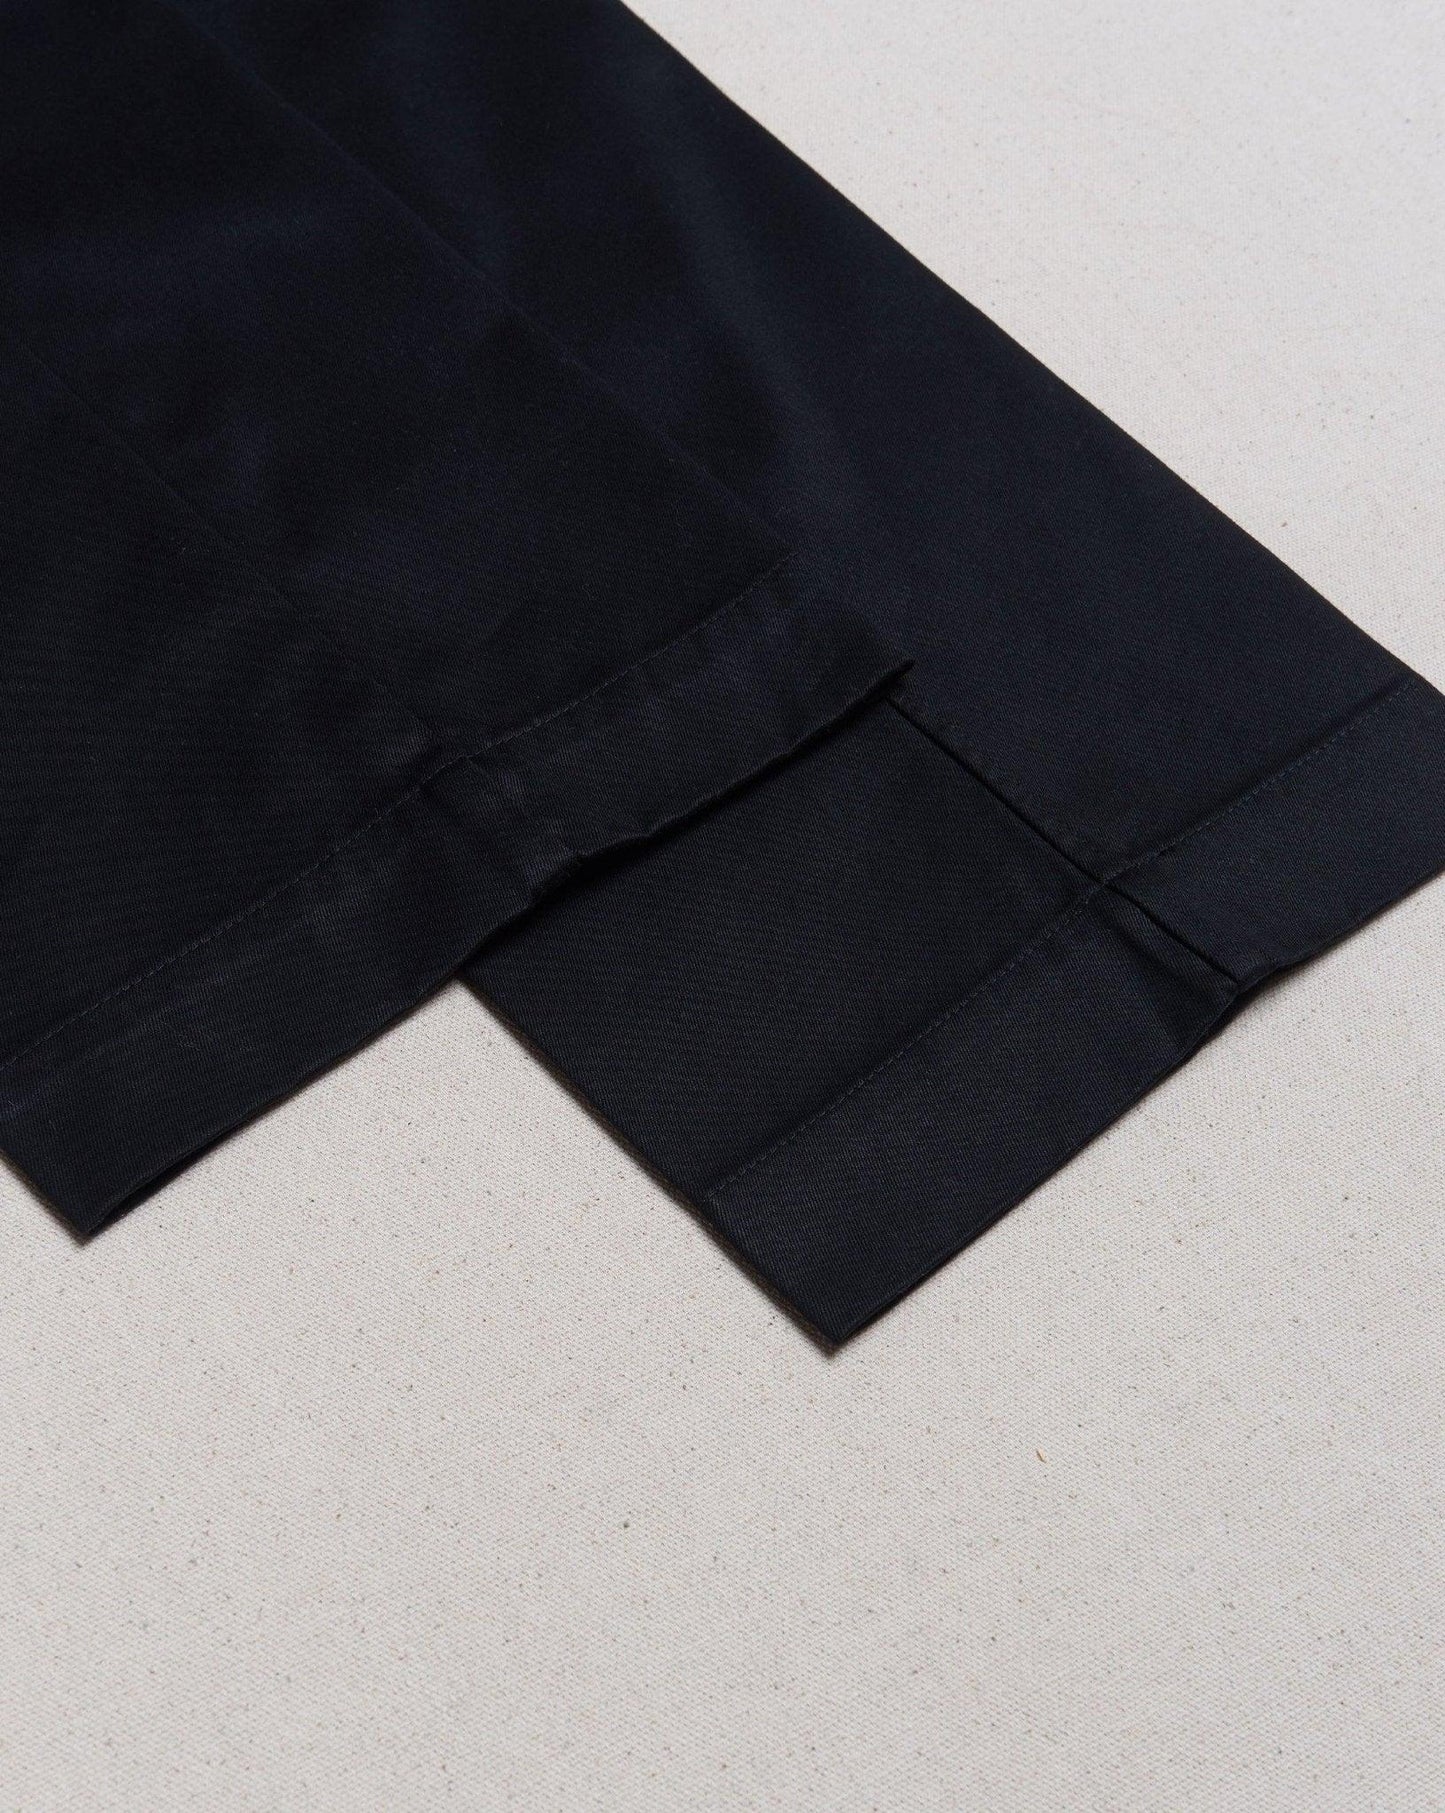 Trophy Clothing 40's Civilian Trousers - Black -Trophy Clothing - URAHARA